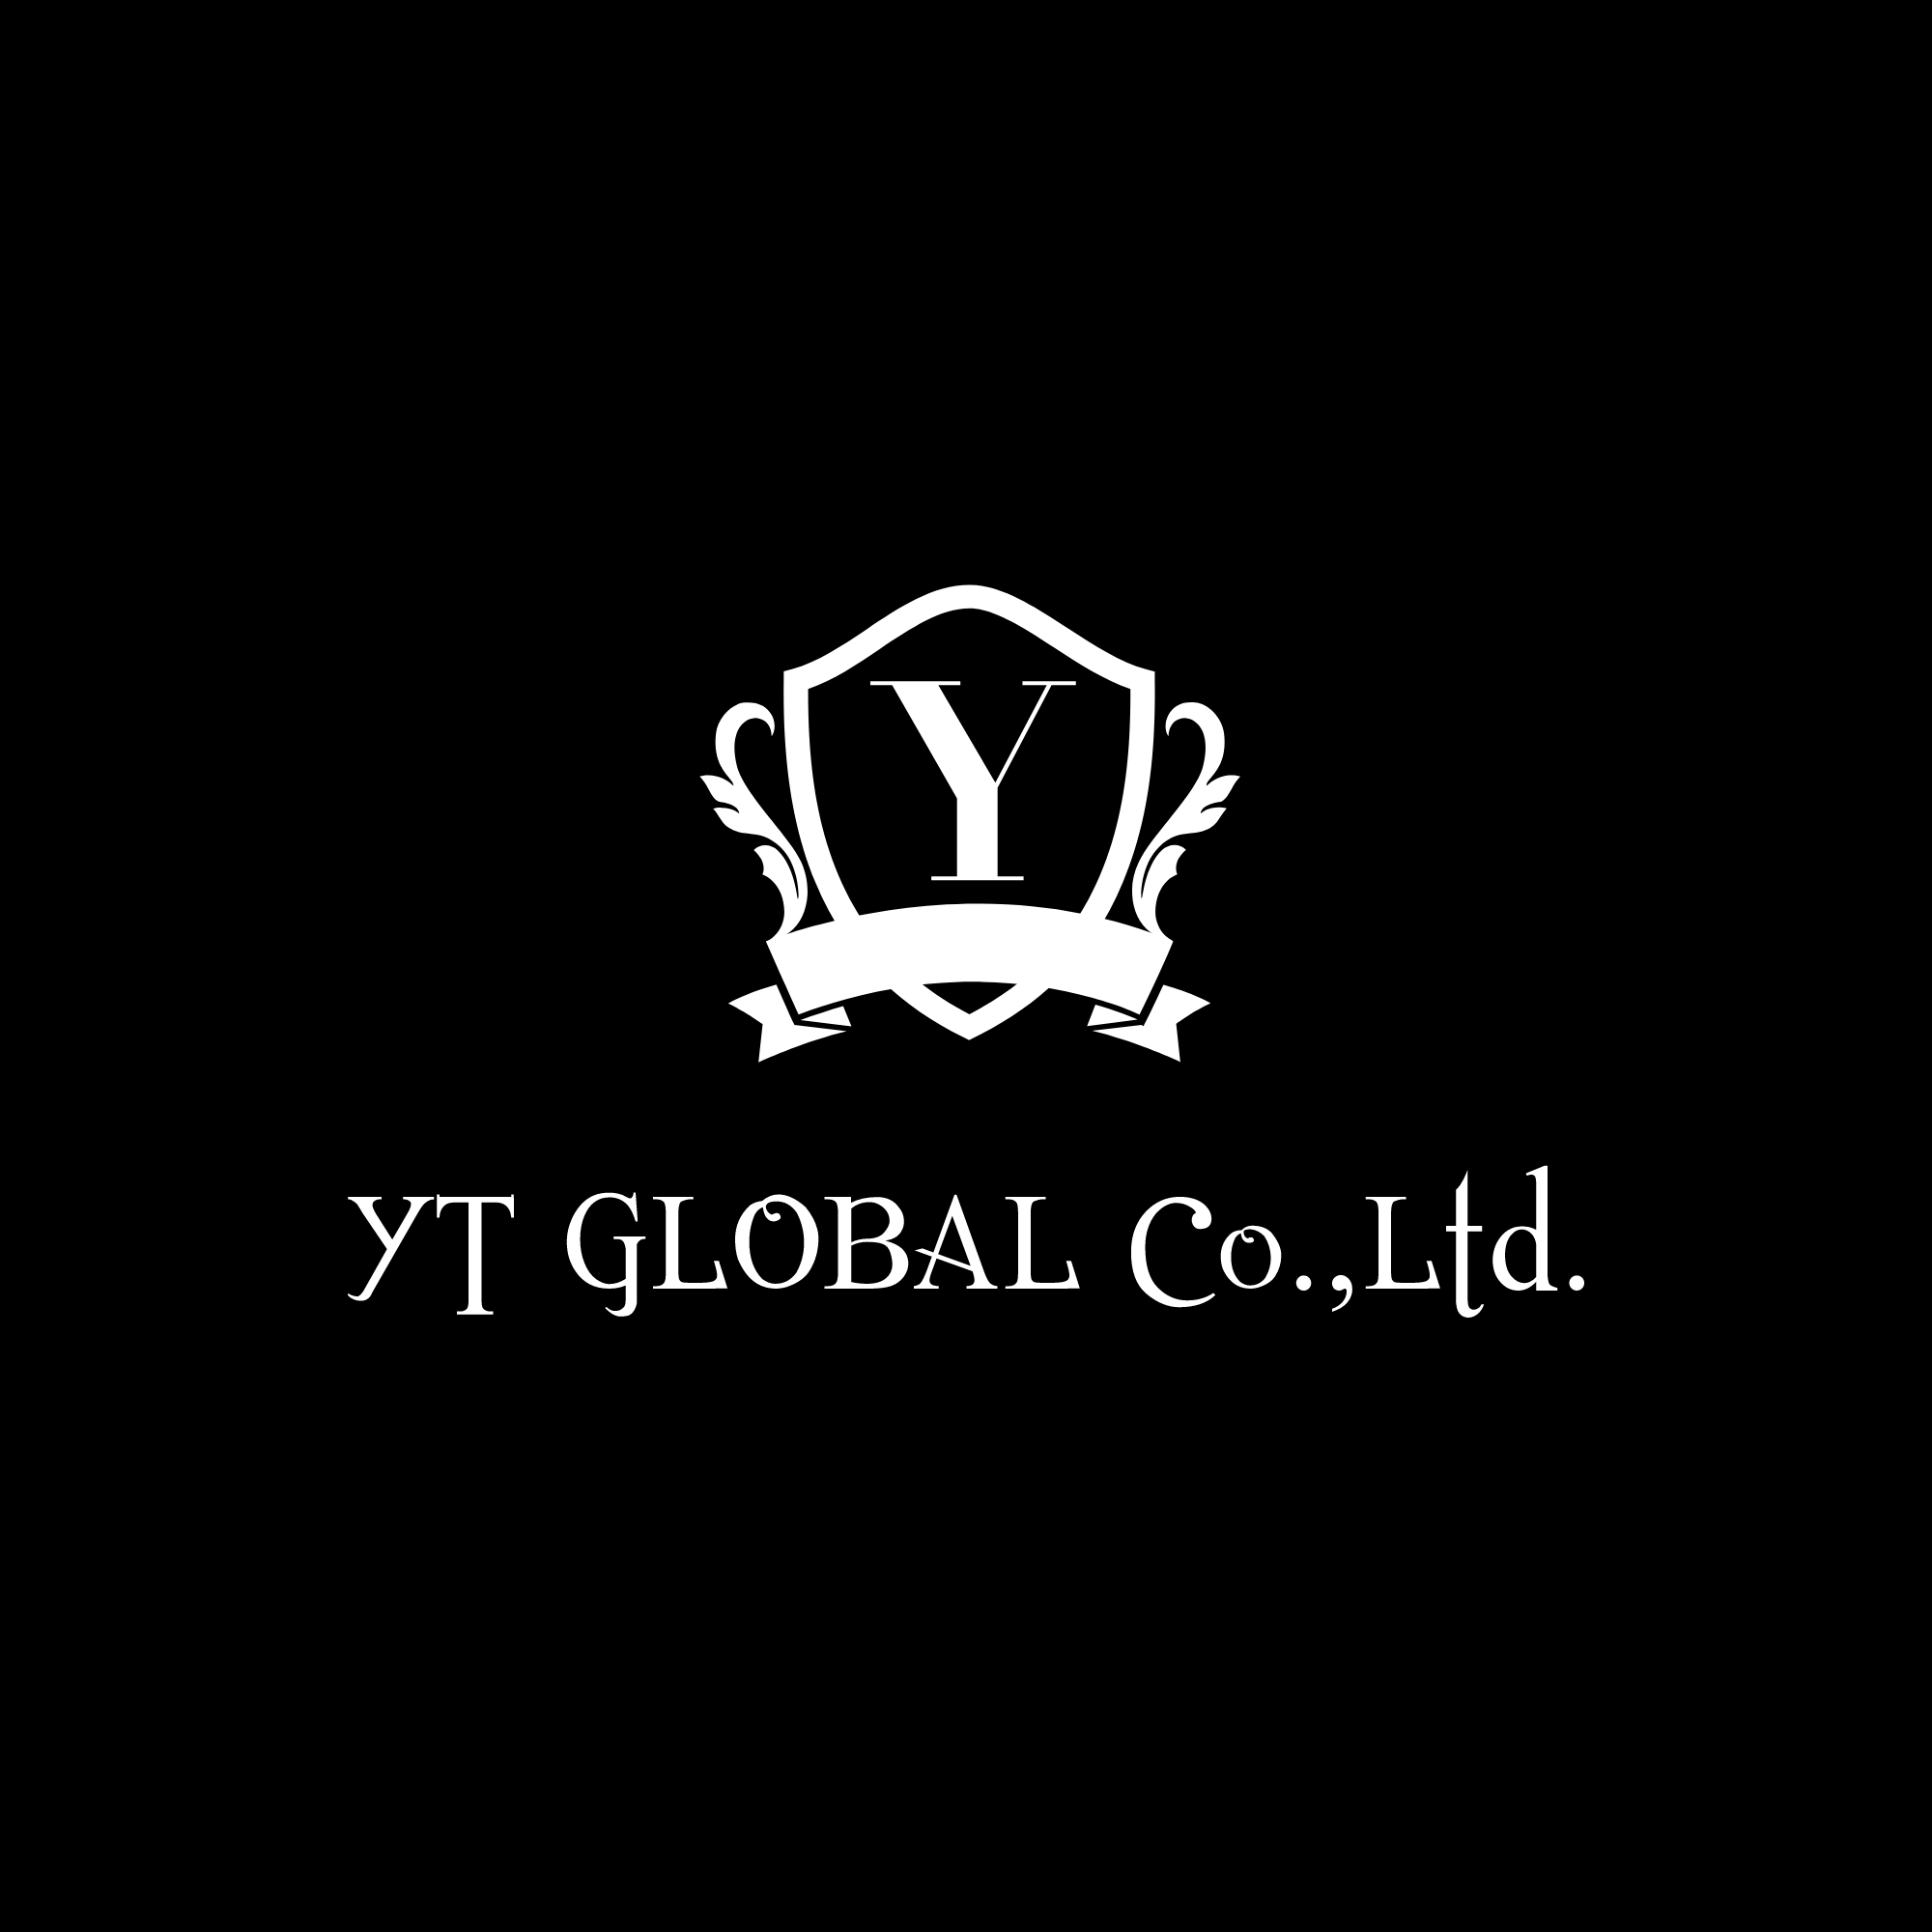 YT GLOBAL CO LTD | 株式会社YTグローバルは時計、アクセサリー ...